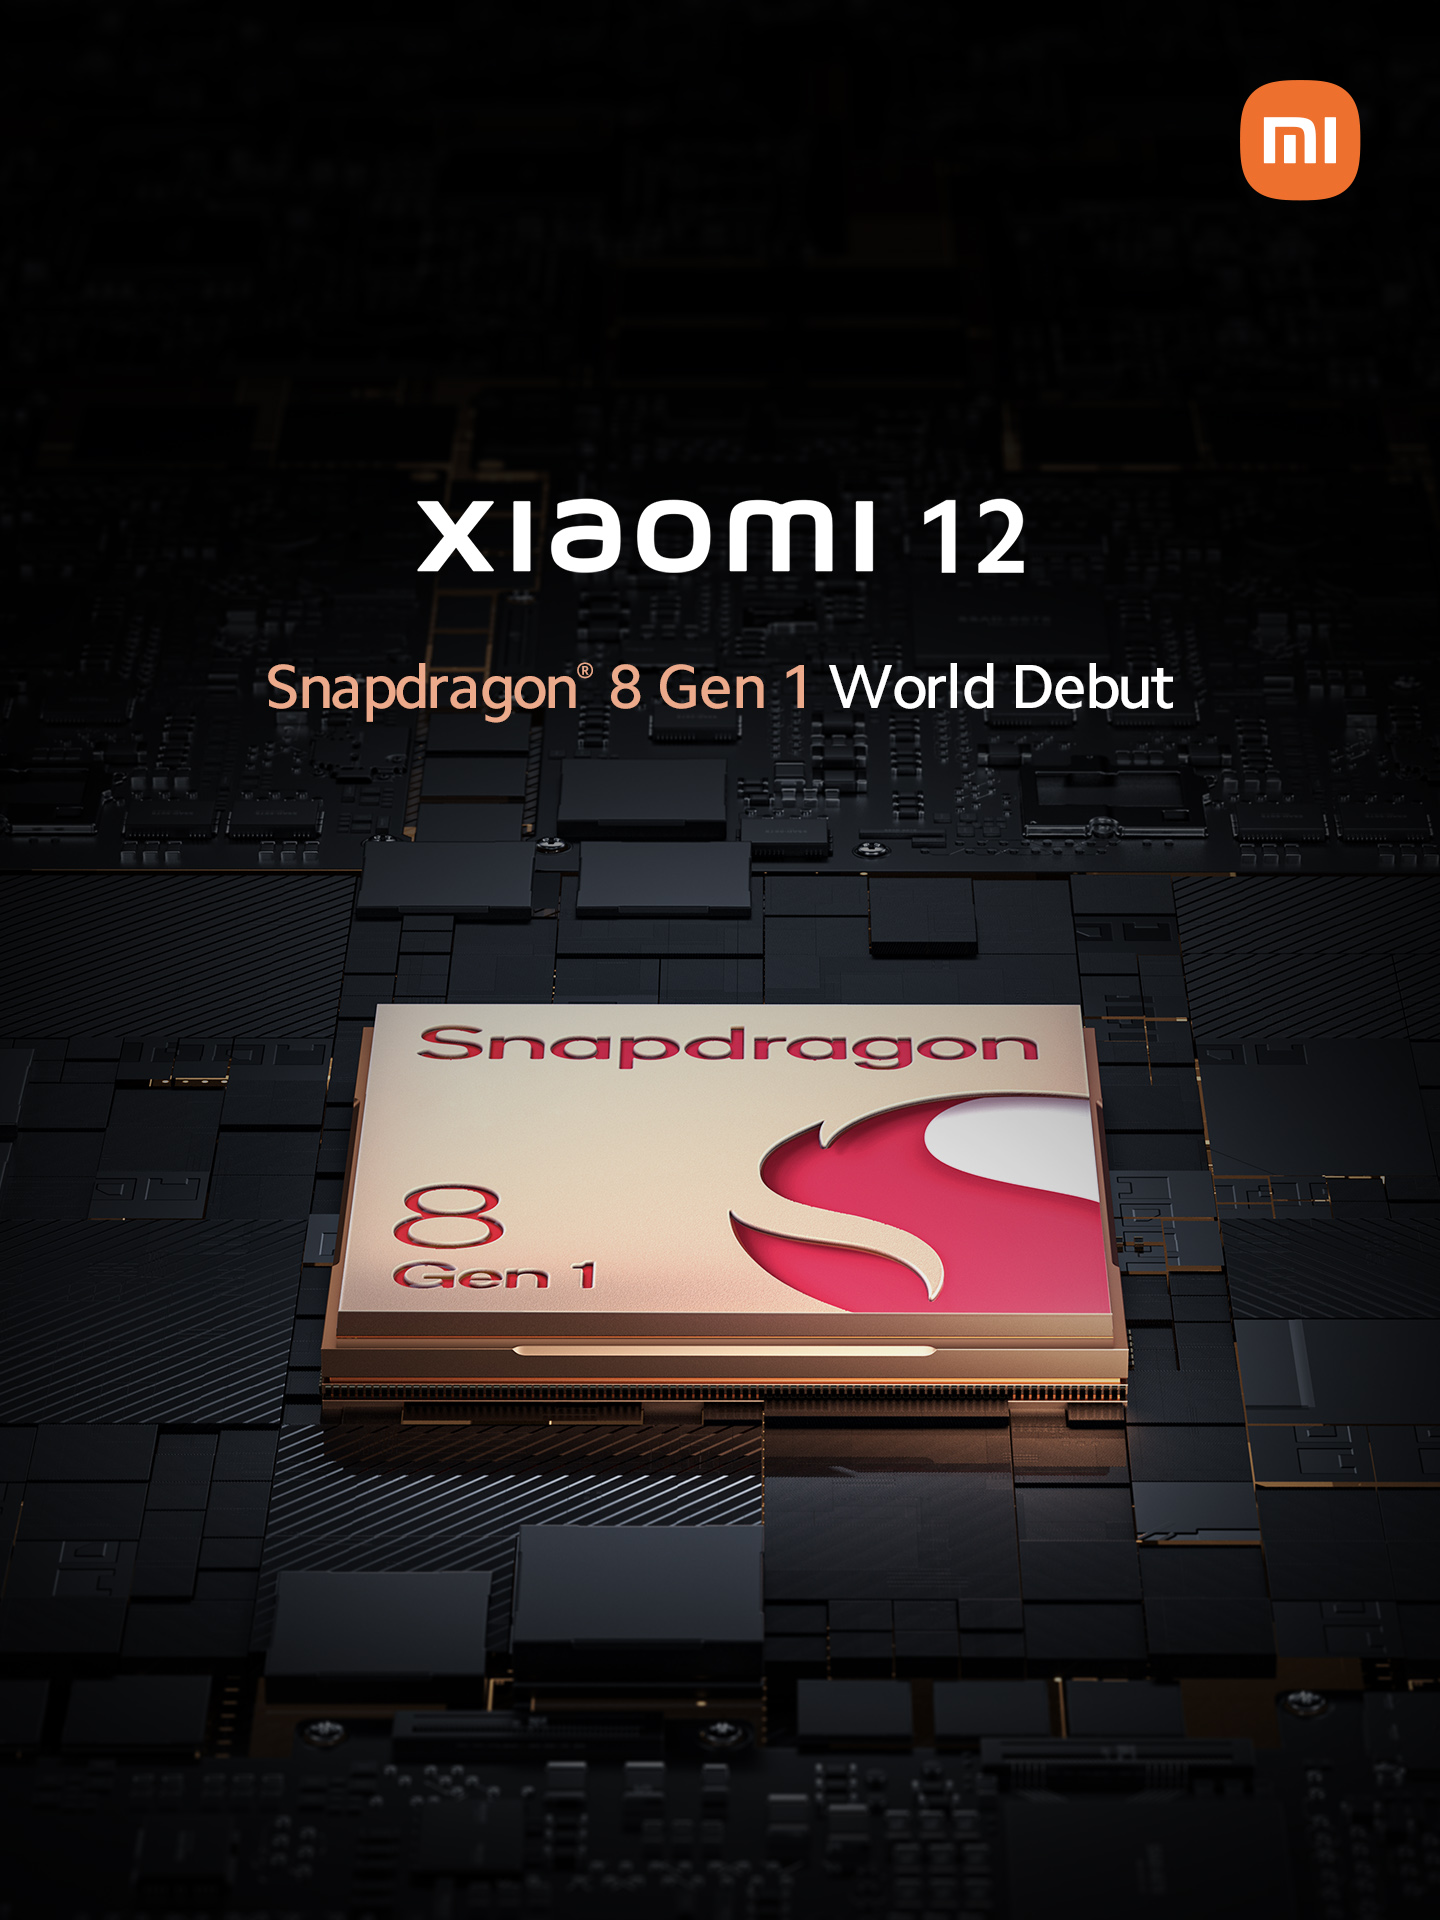 Xiaomi 12 Snapdragon 8 Gen 1 Confirmed